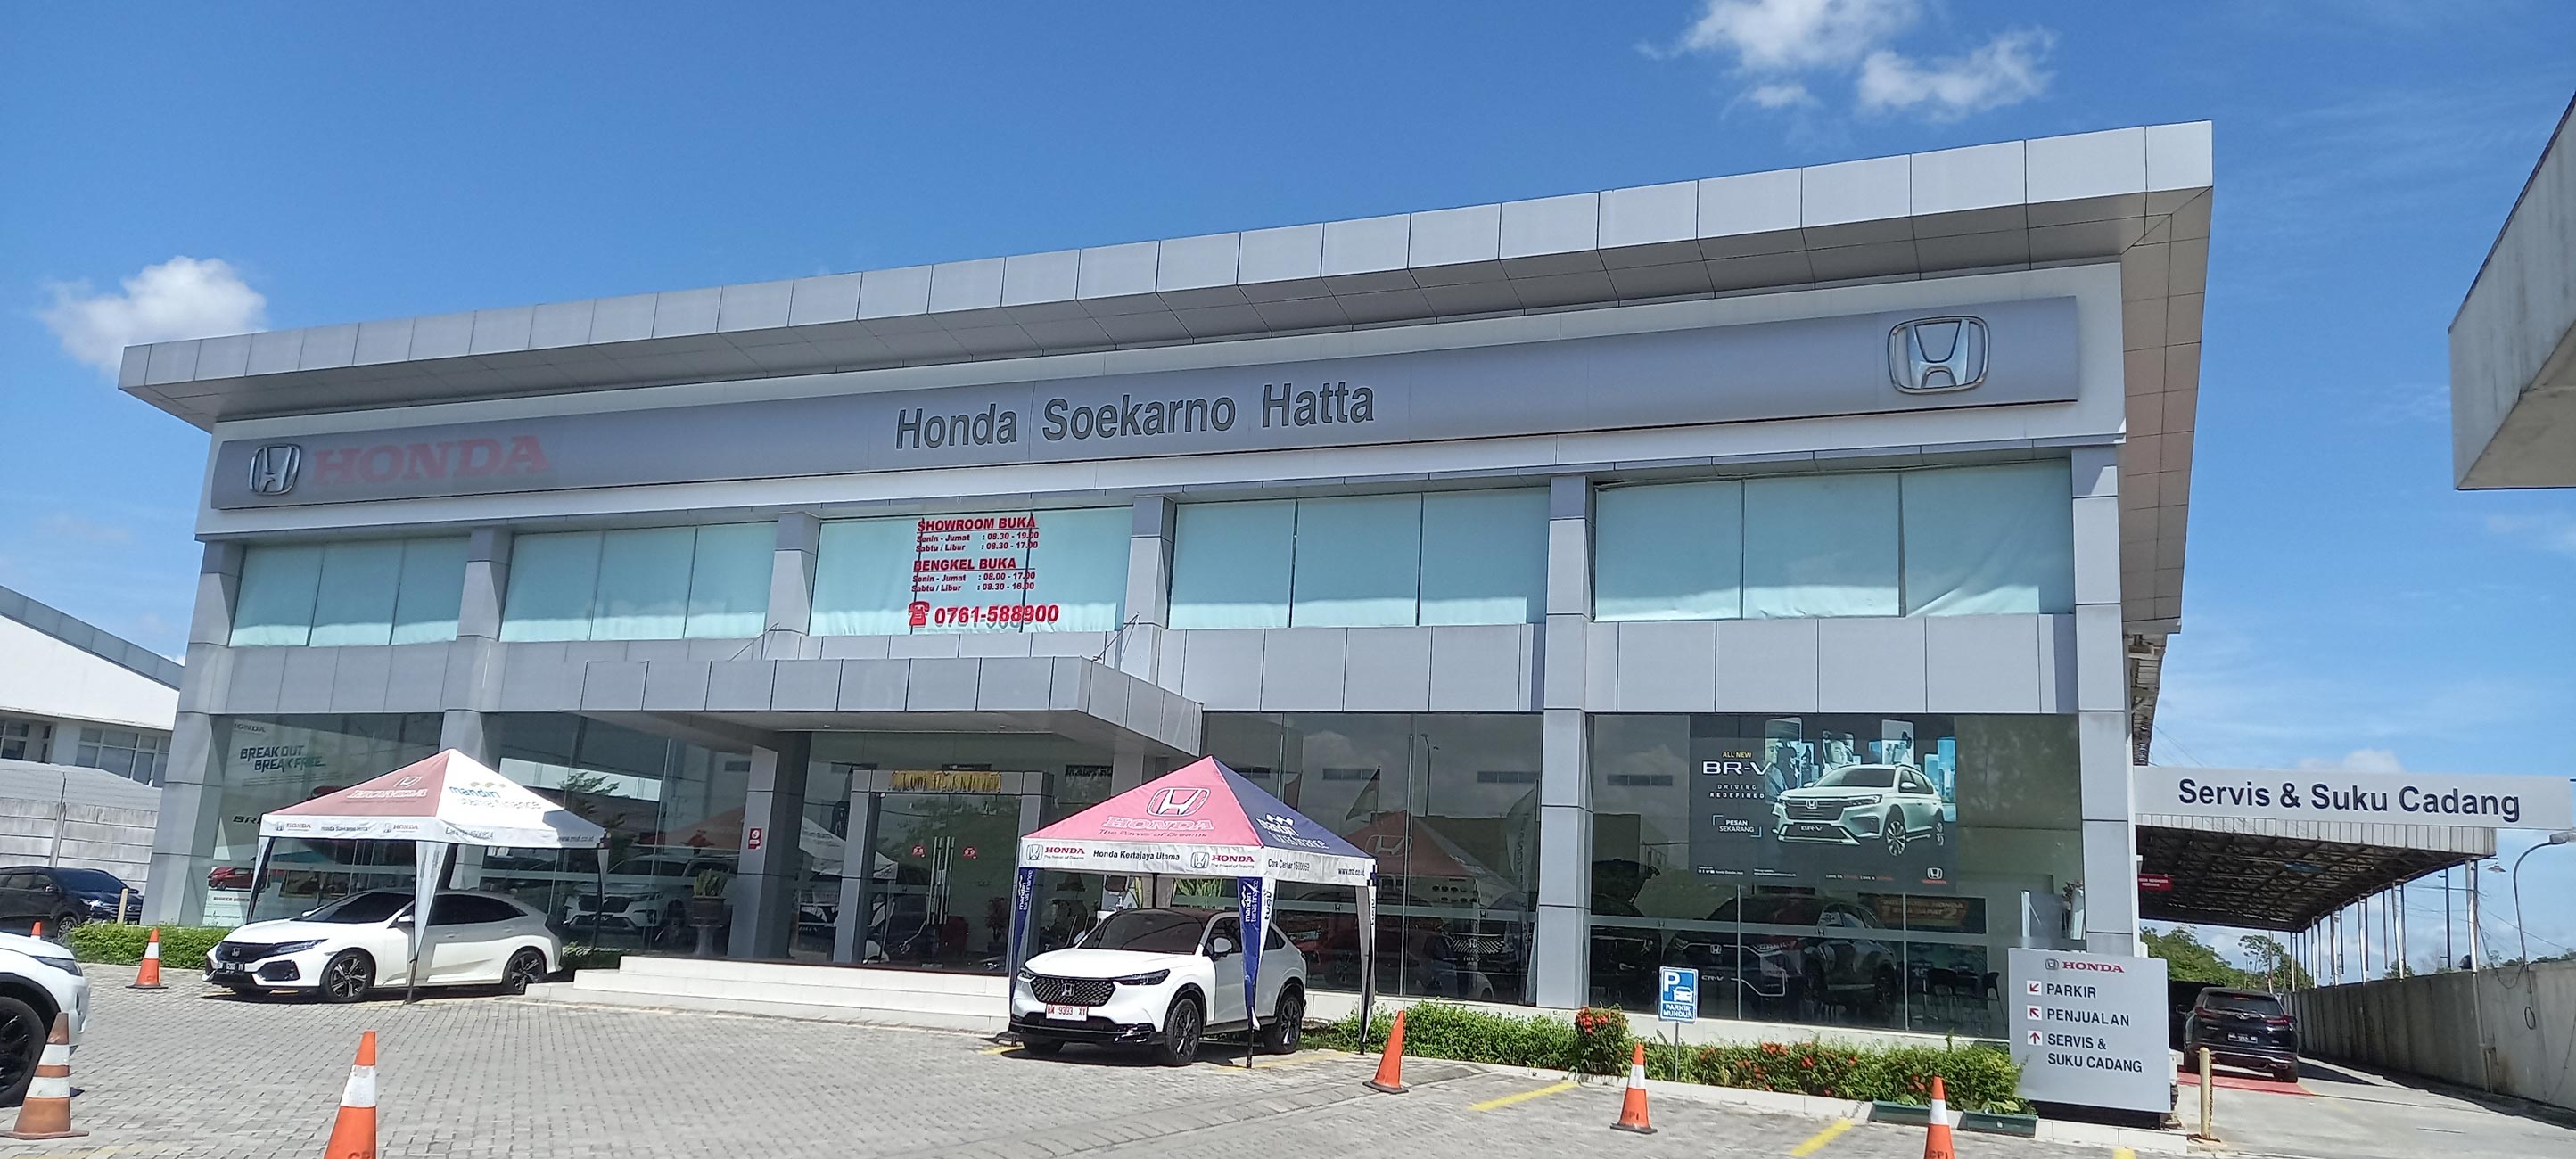 Honda Soekarno Hatta